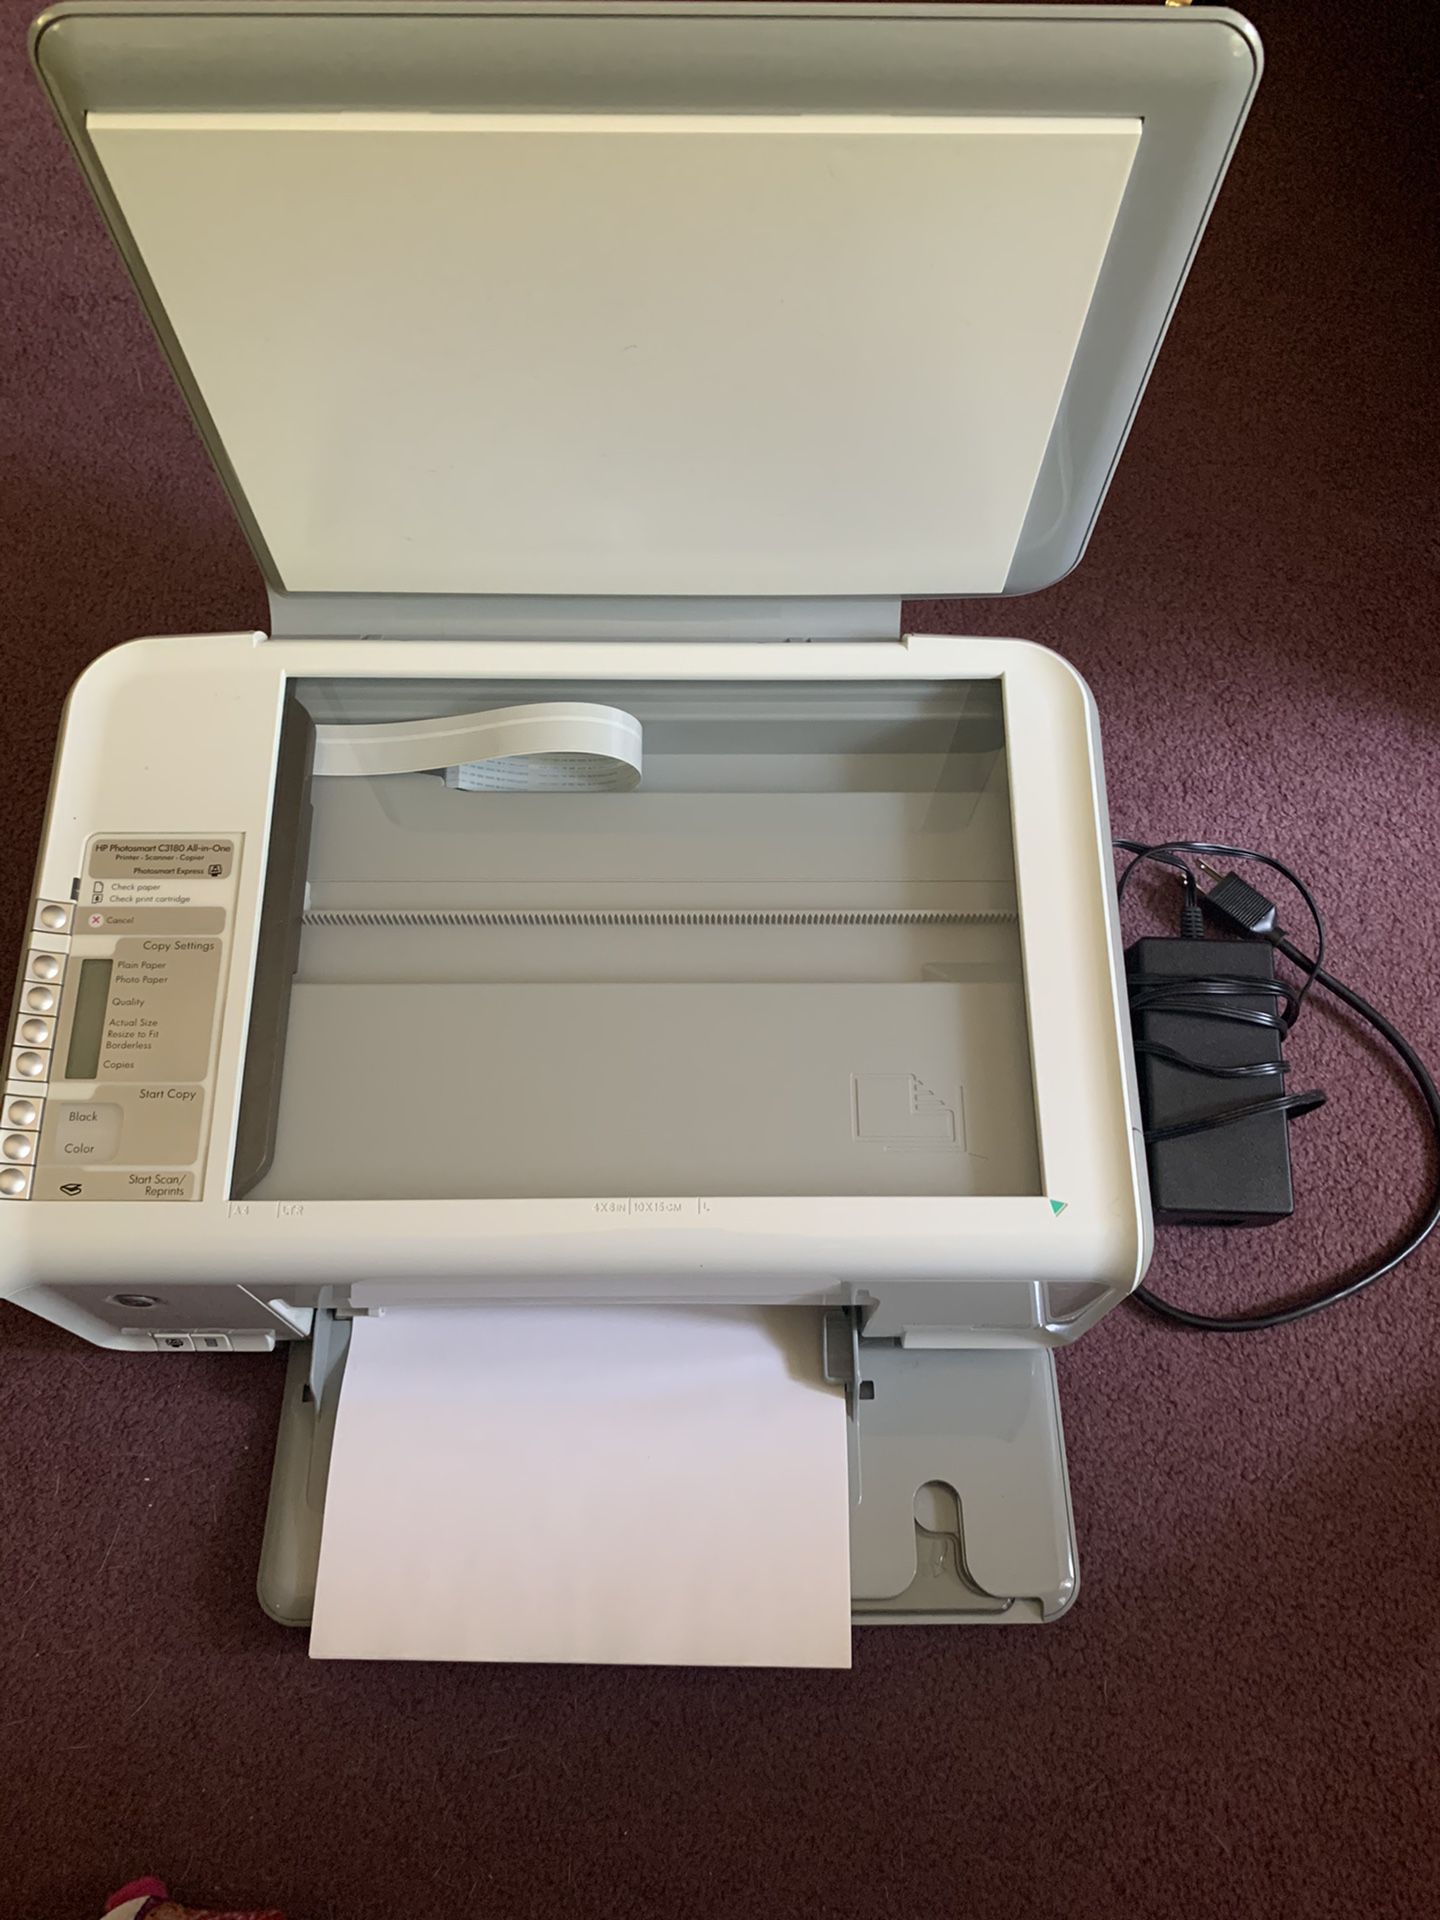 HP C3180 all in one printer scanner copier Photosmart Express